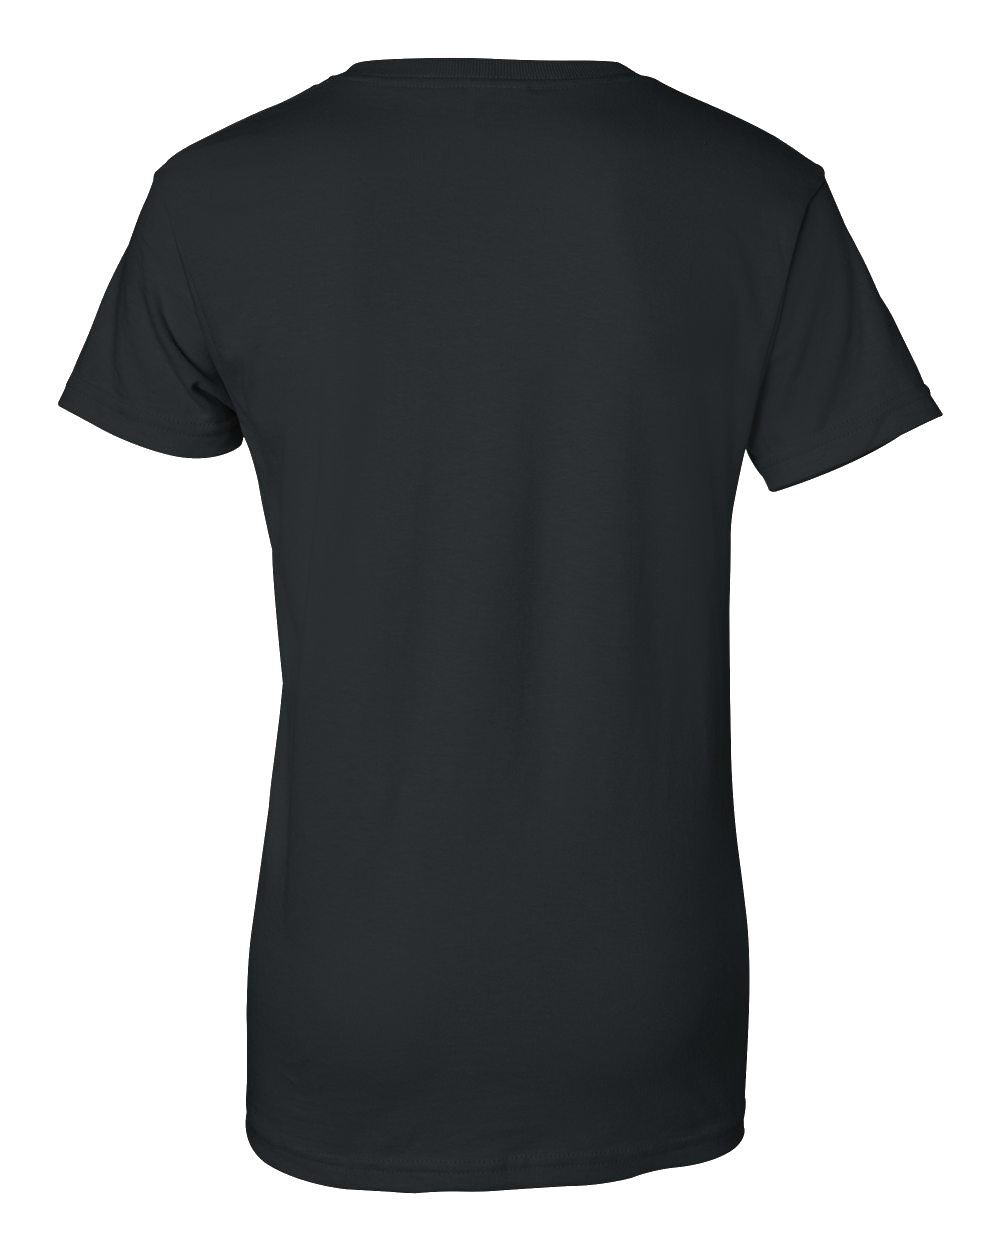 Ladies Black Advance, MO | Retro, Vintage Style Missouri Pride  T-shirt